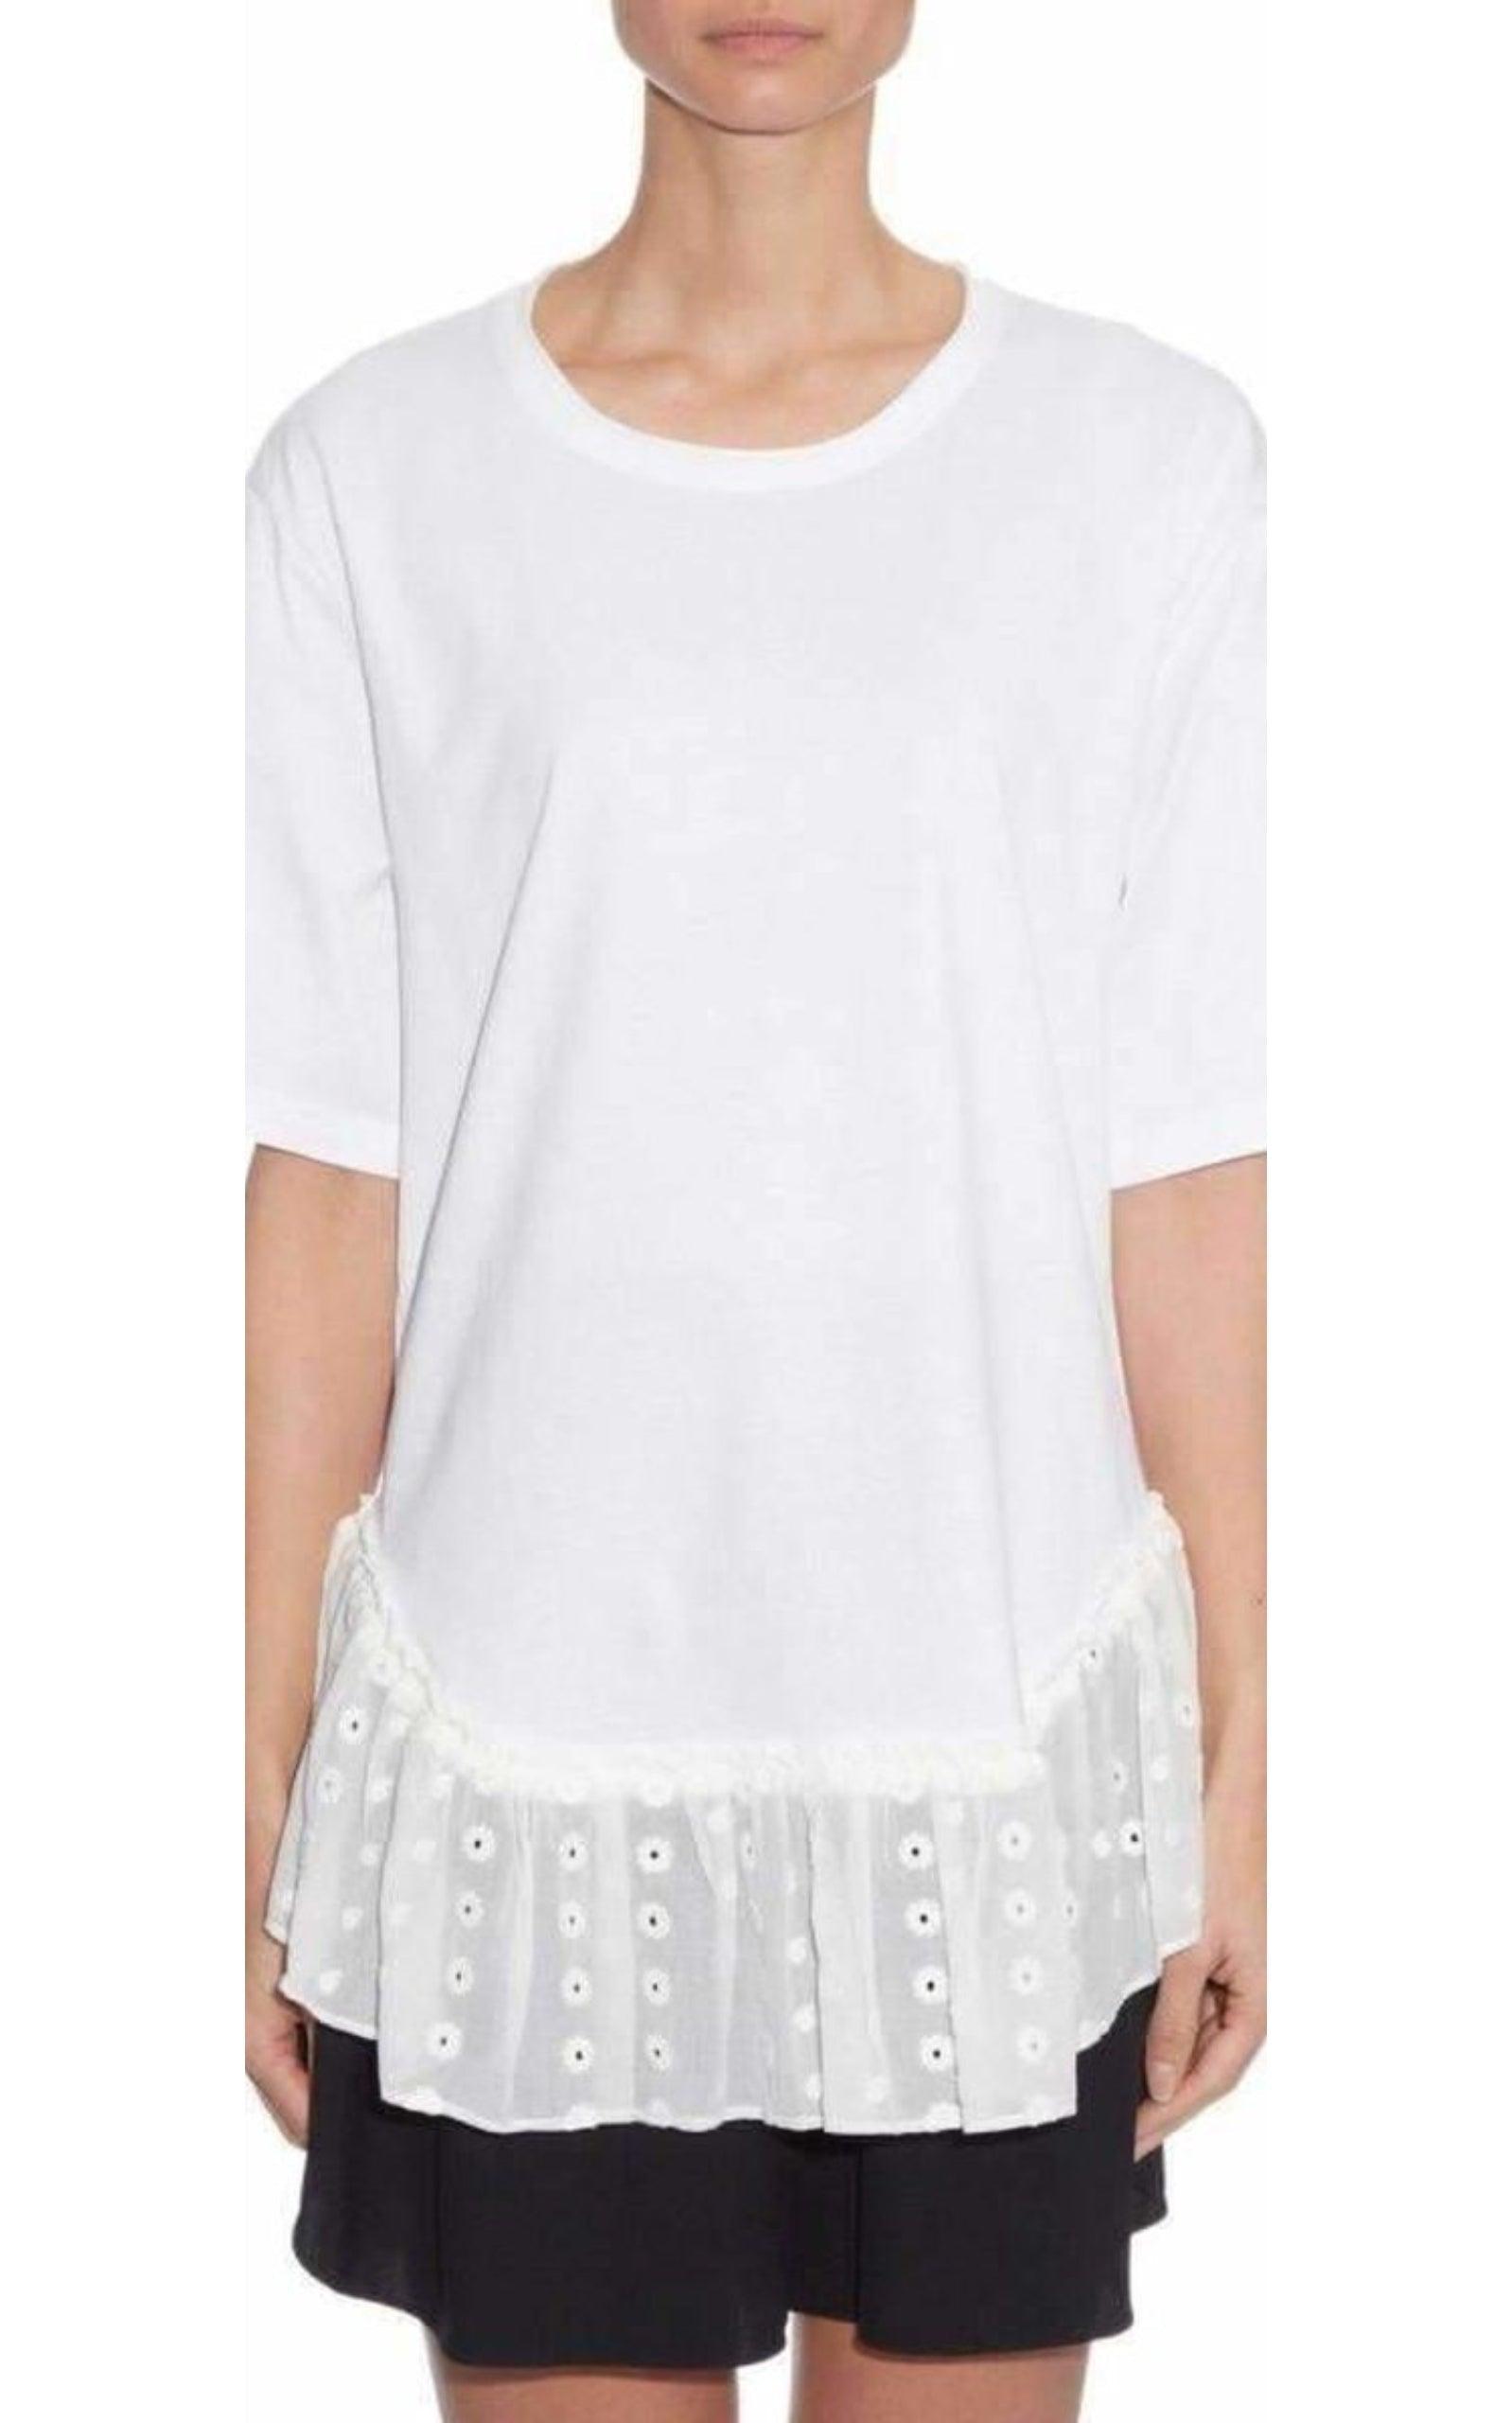  ChloeLace Trimmed White Short Sleeve T-Shirt - Runway Catalog